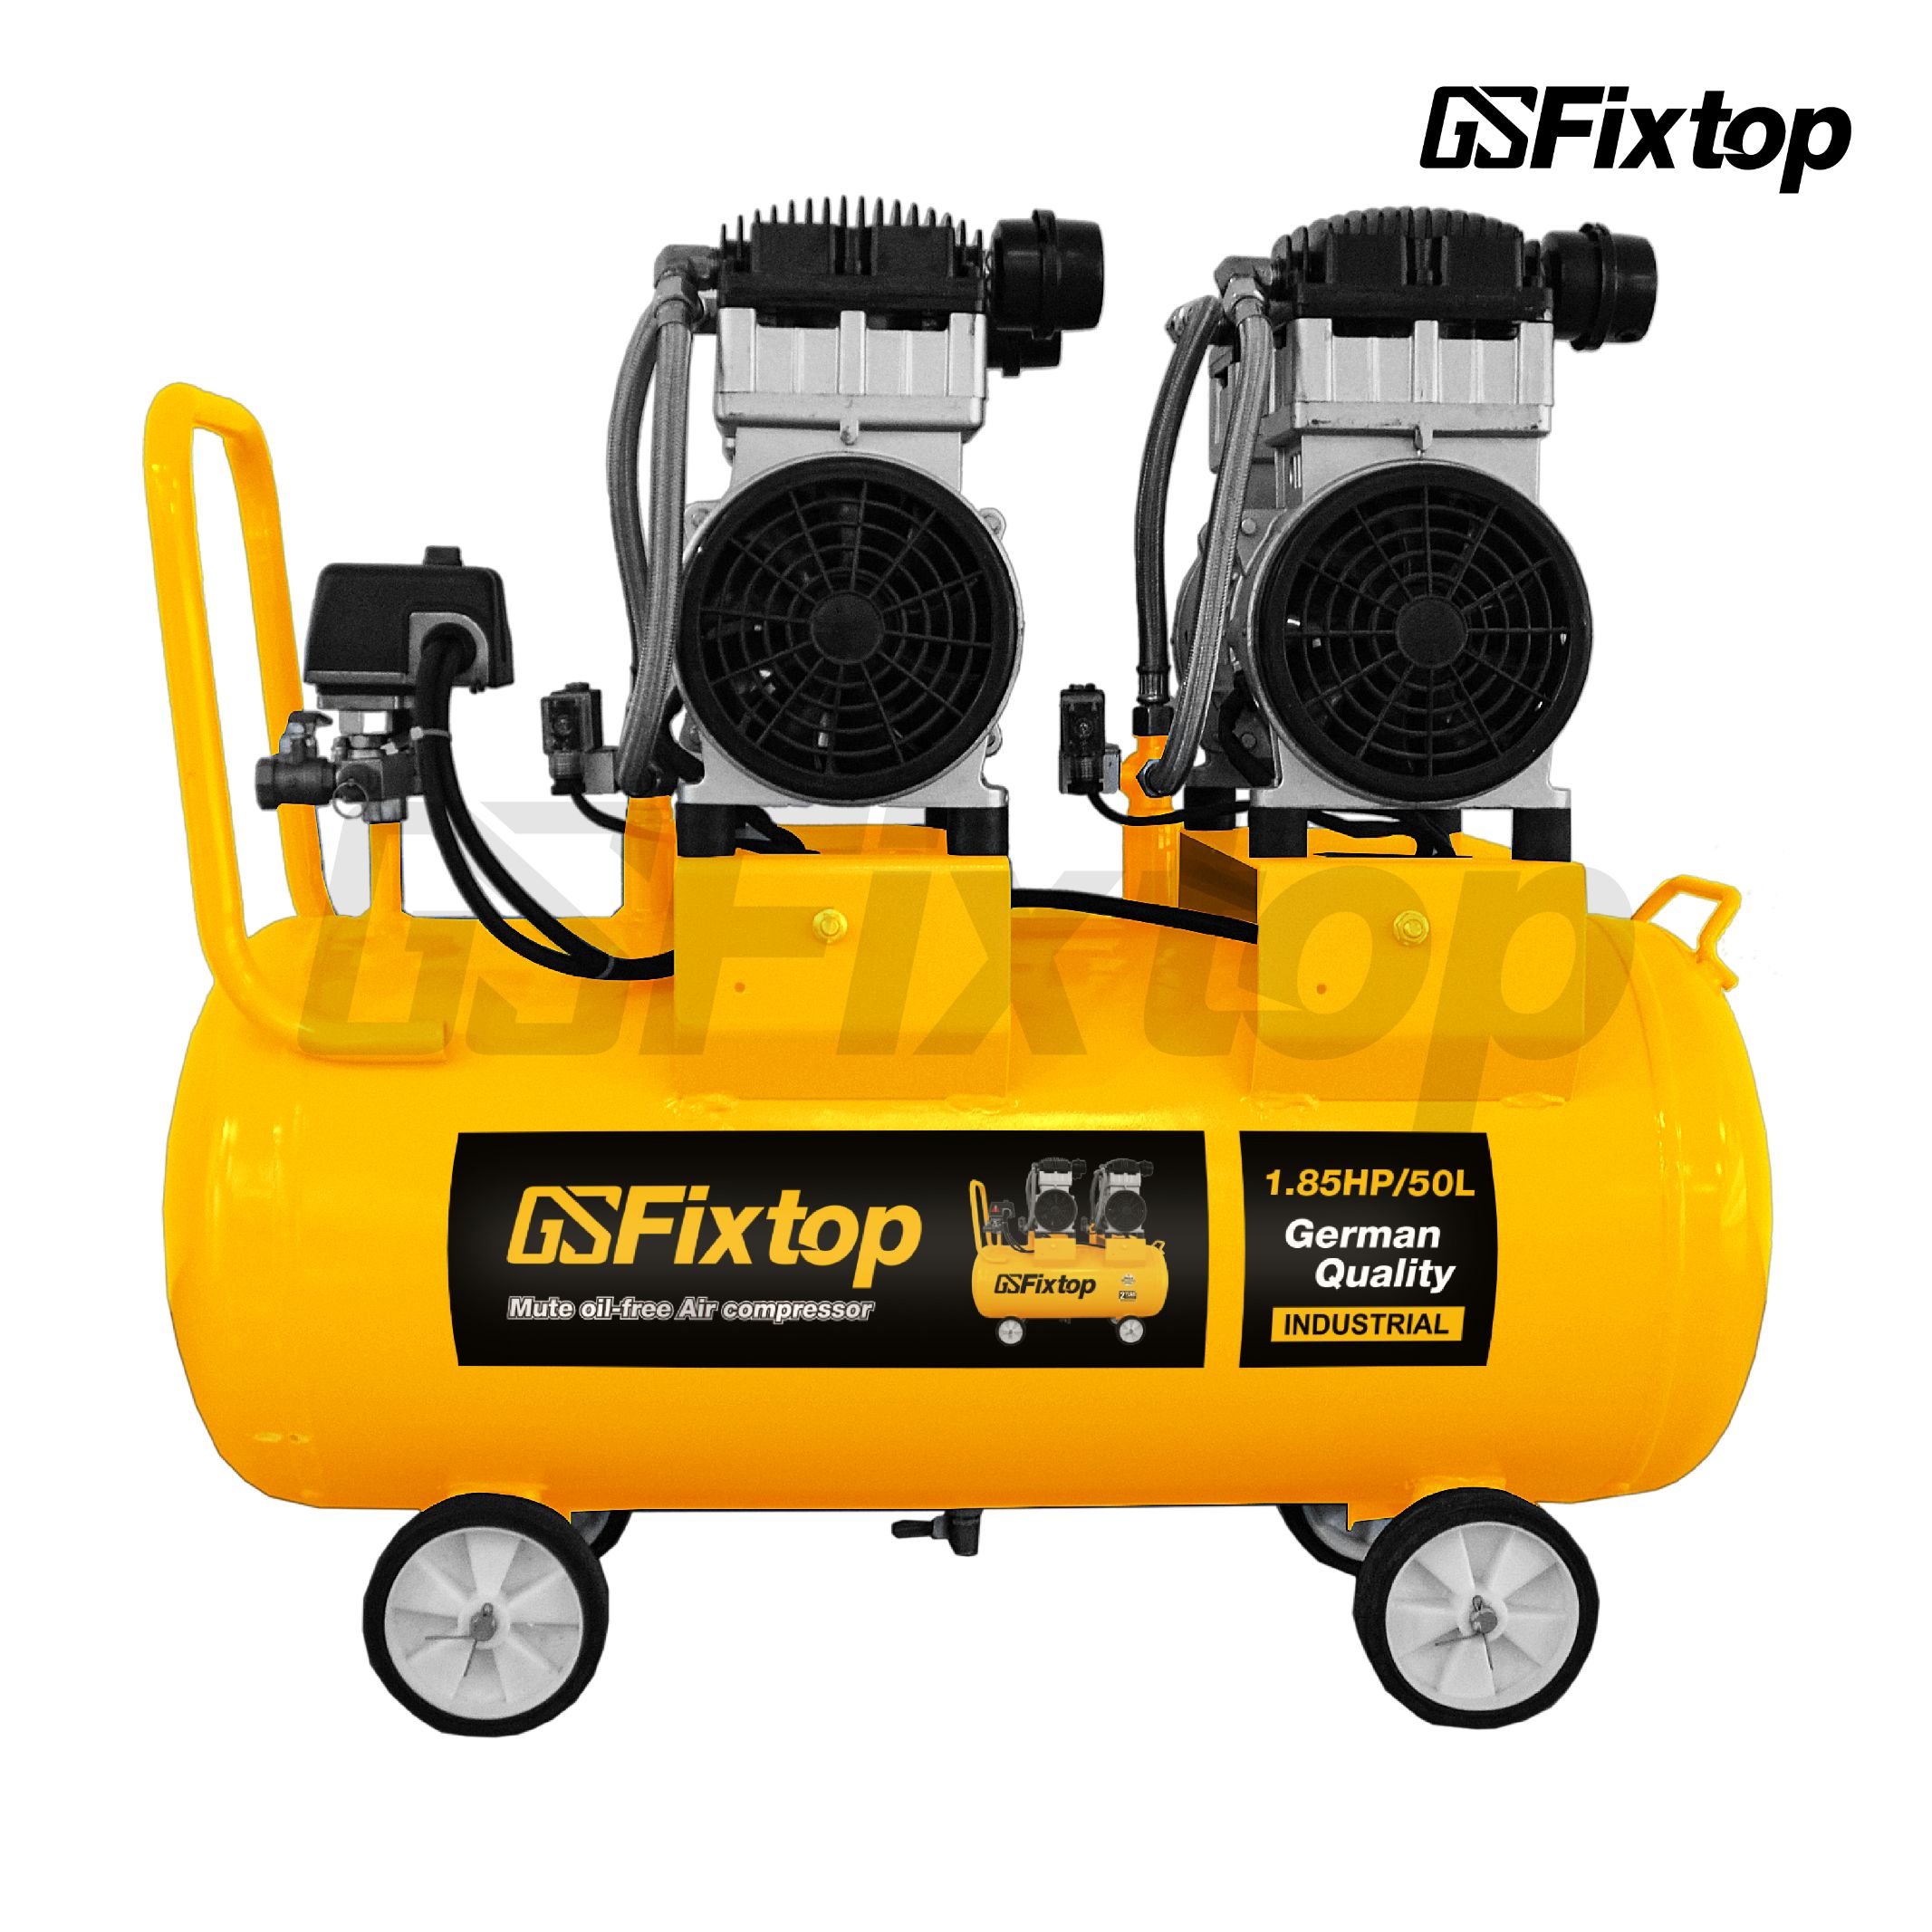 GSFixtop工具70L静音无油空气压缩机Mute oil-freeAir compressor详情图3